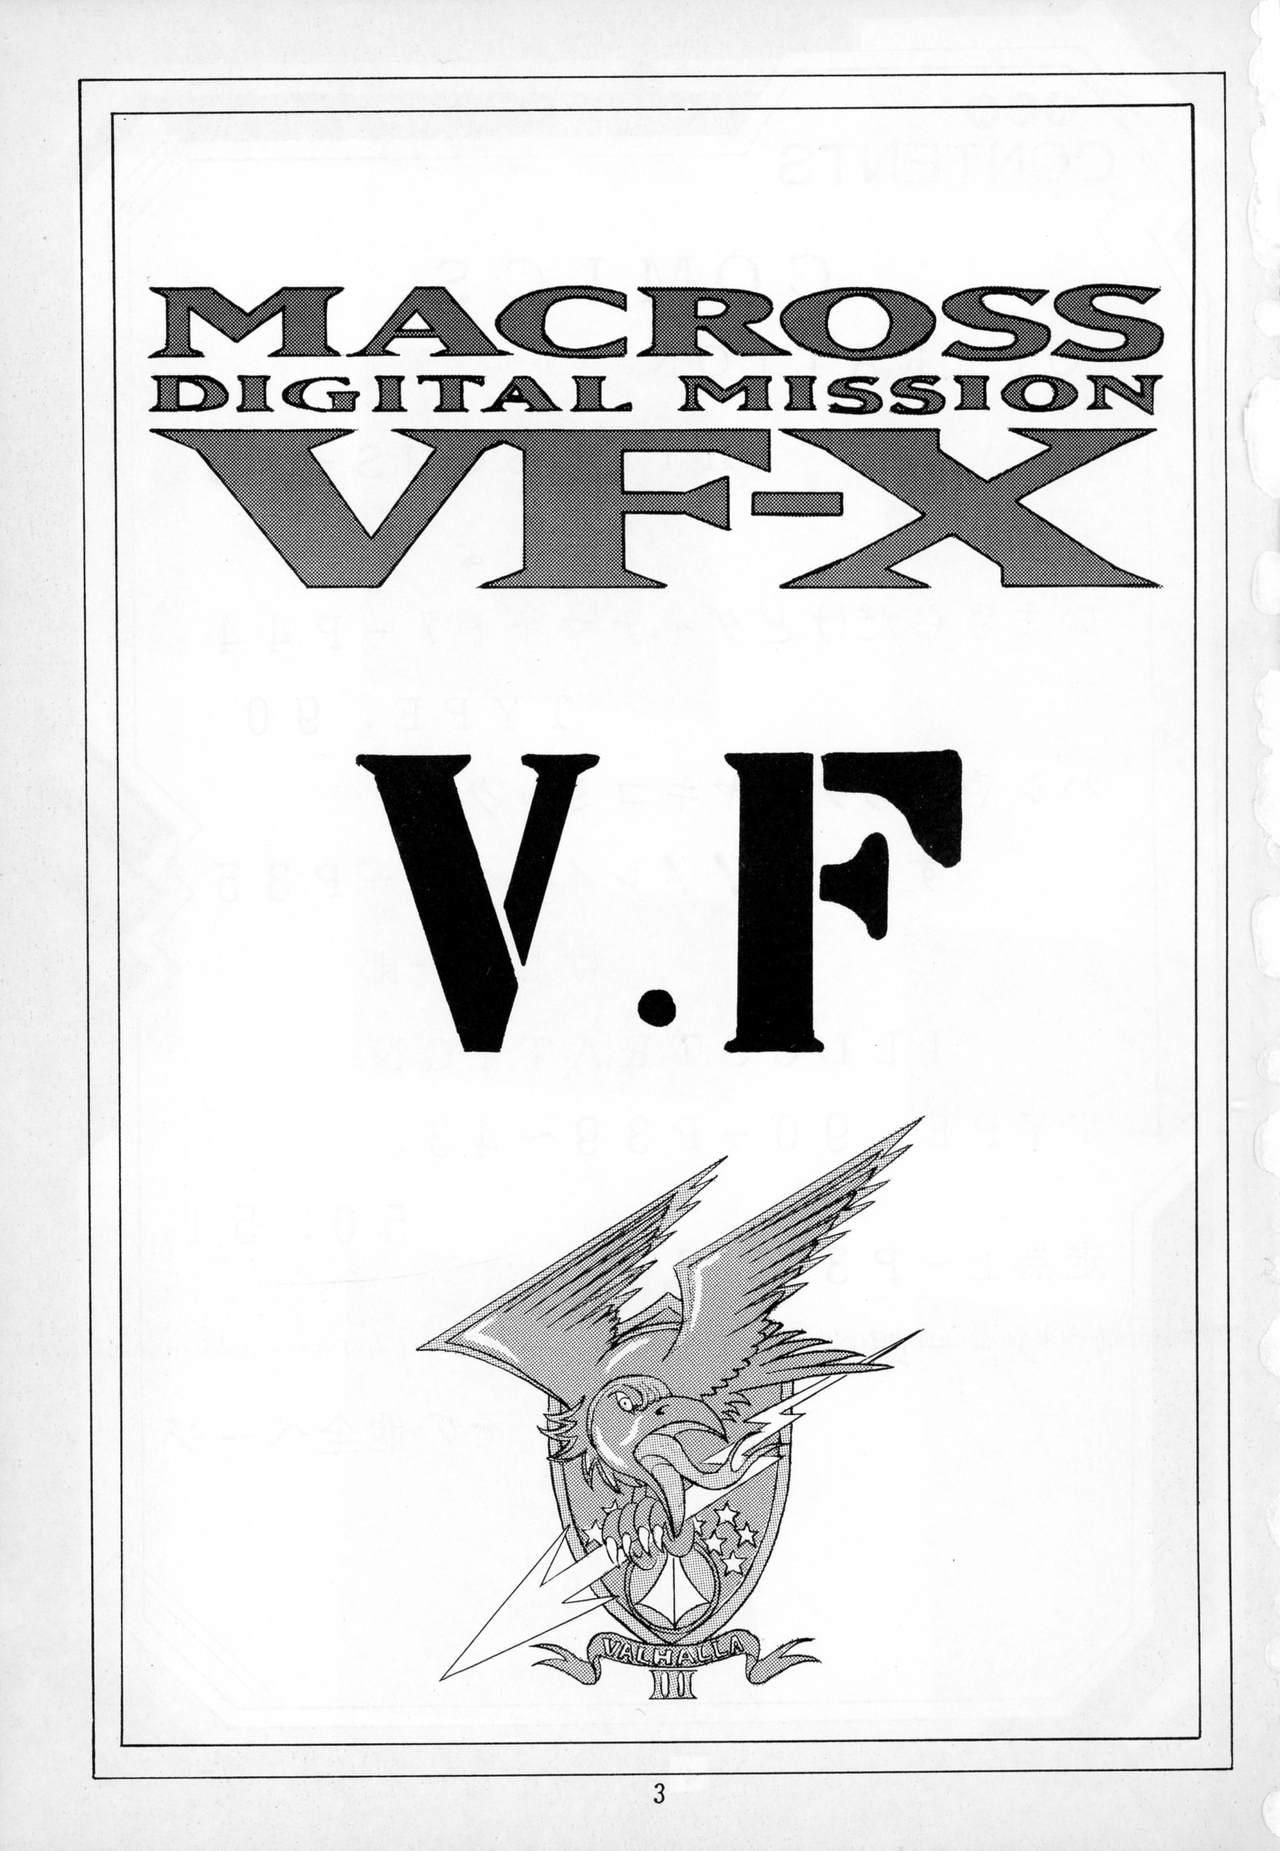 Dirty V.F - Macross 7 Macross Macross vf-x Gilf - Page 3